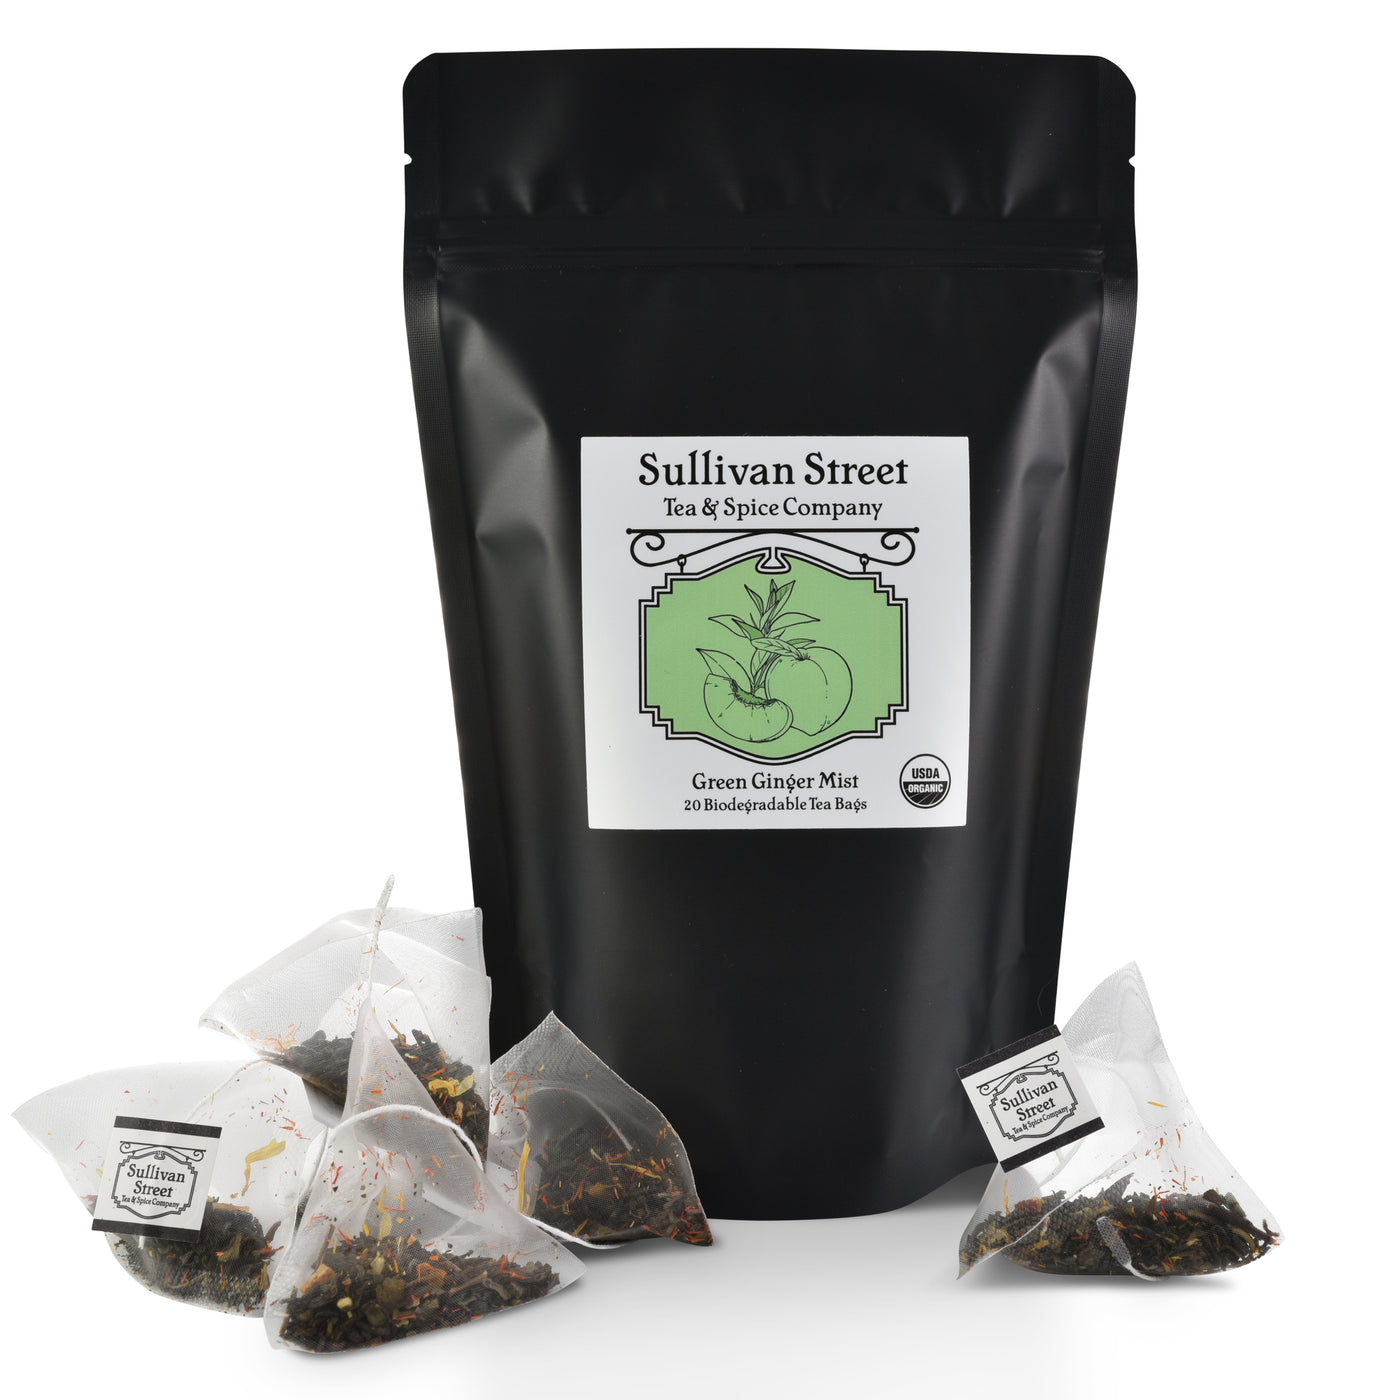 Green Ginger Mist Tea Bags - Sullivan Street Tea & Spice Company